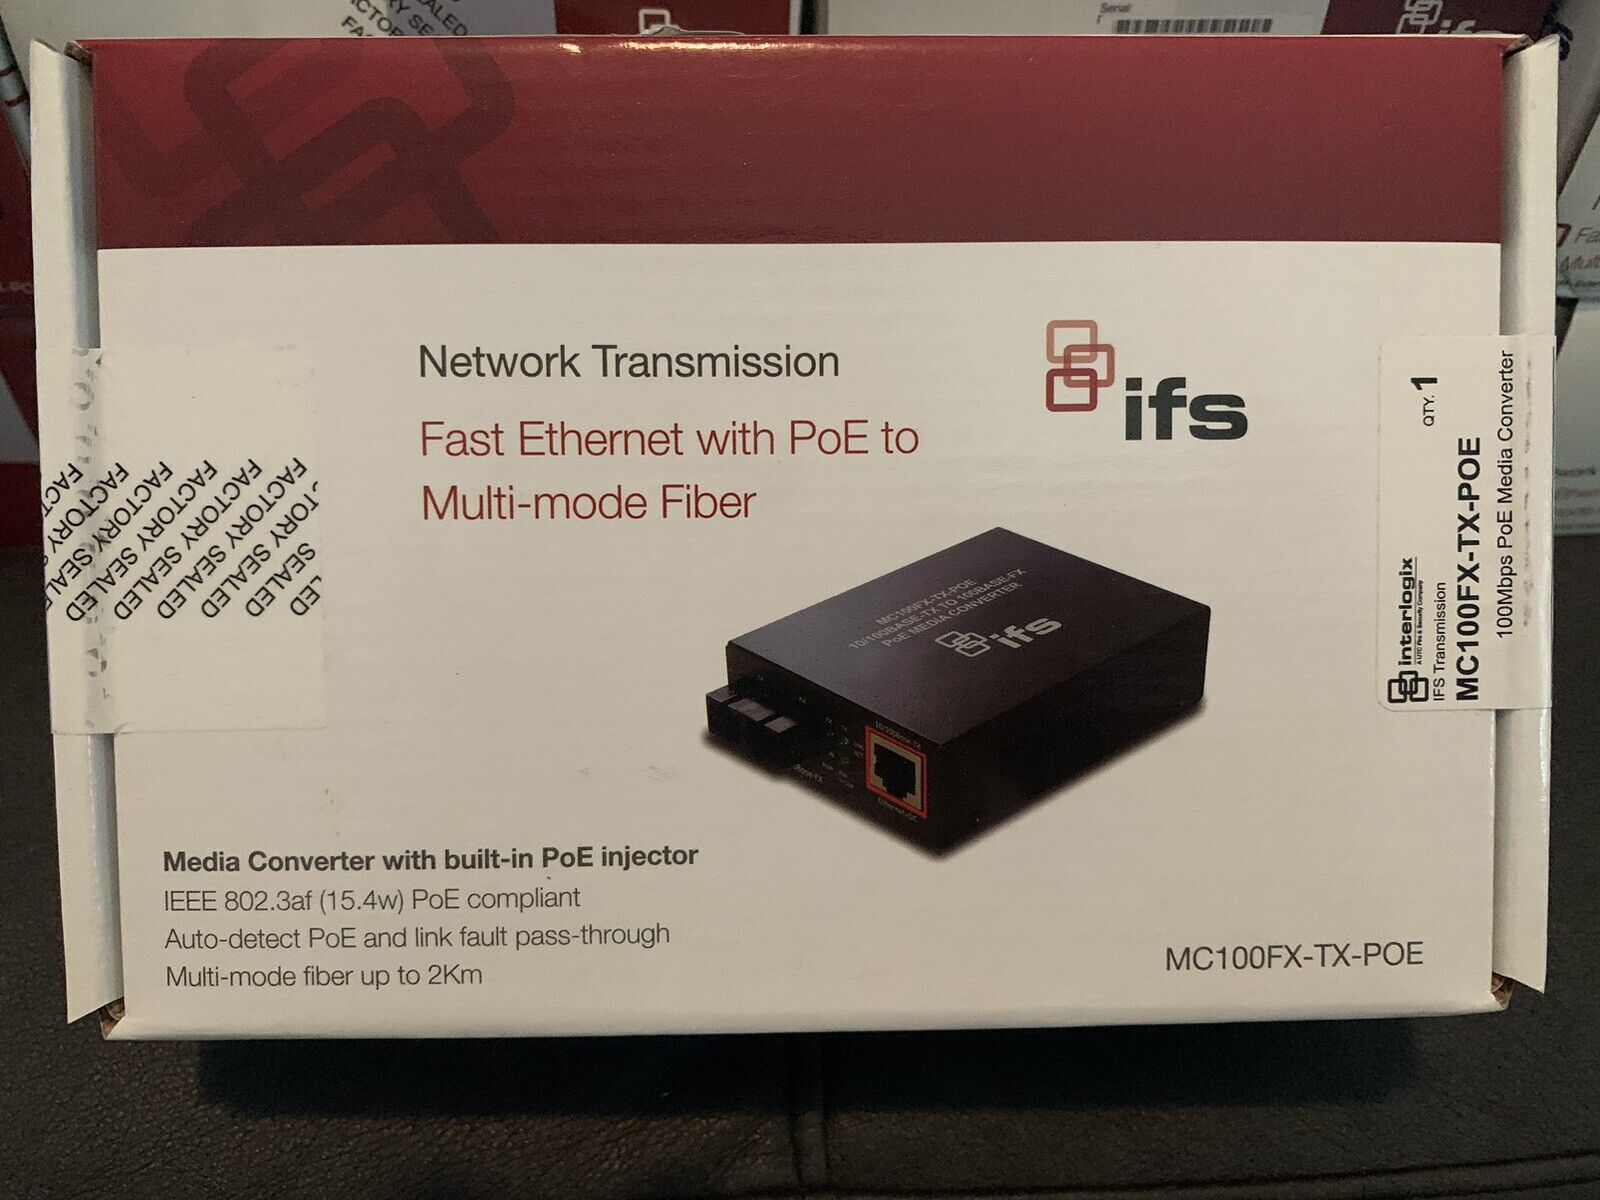 IFS MC100FX-TX-POE Fast Ethernet with PoE to Multi-mode Fiber Media Converter